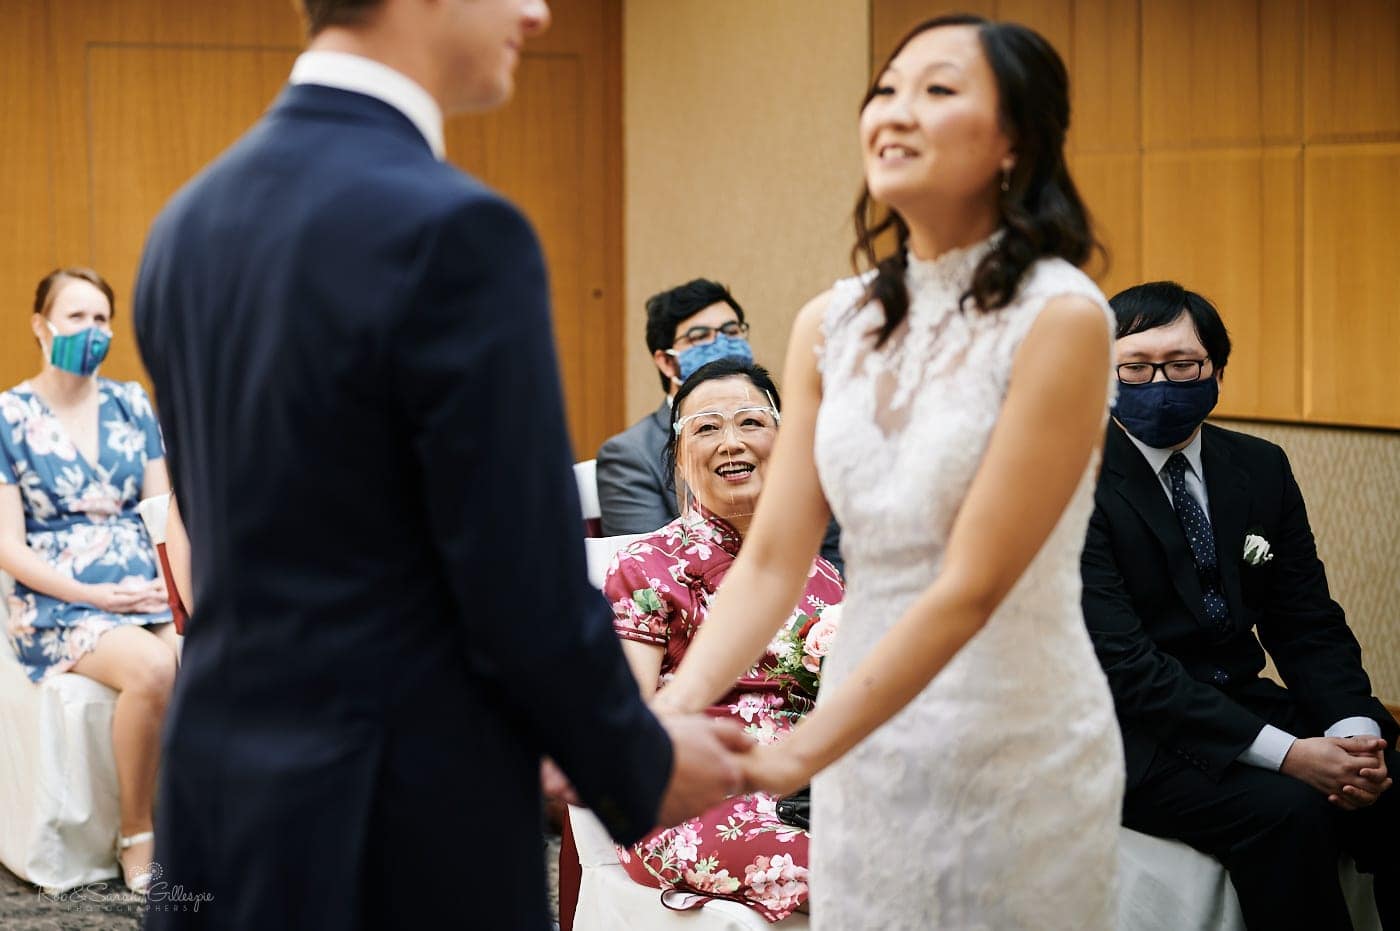 Bride's mum watches as bride and groom exchange wedding vows